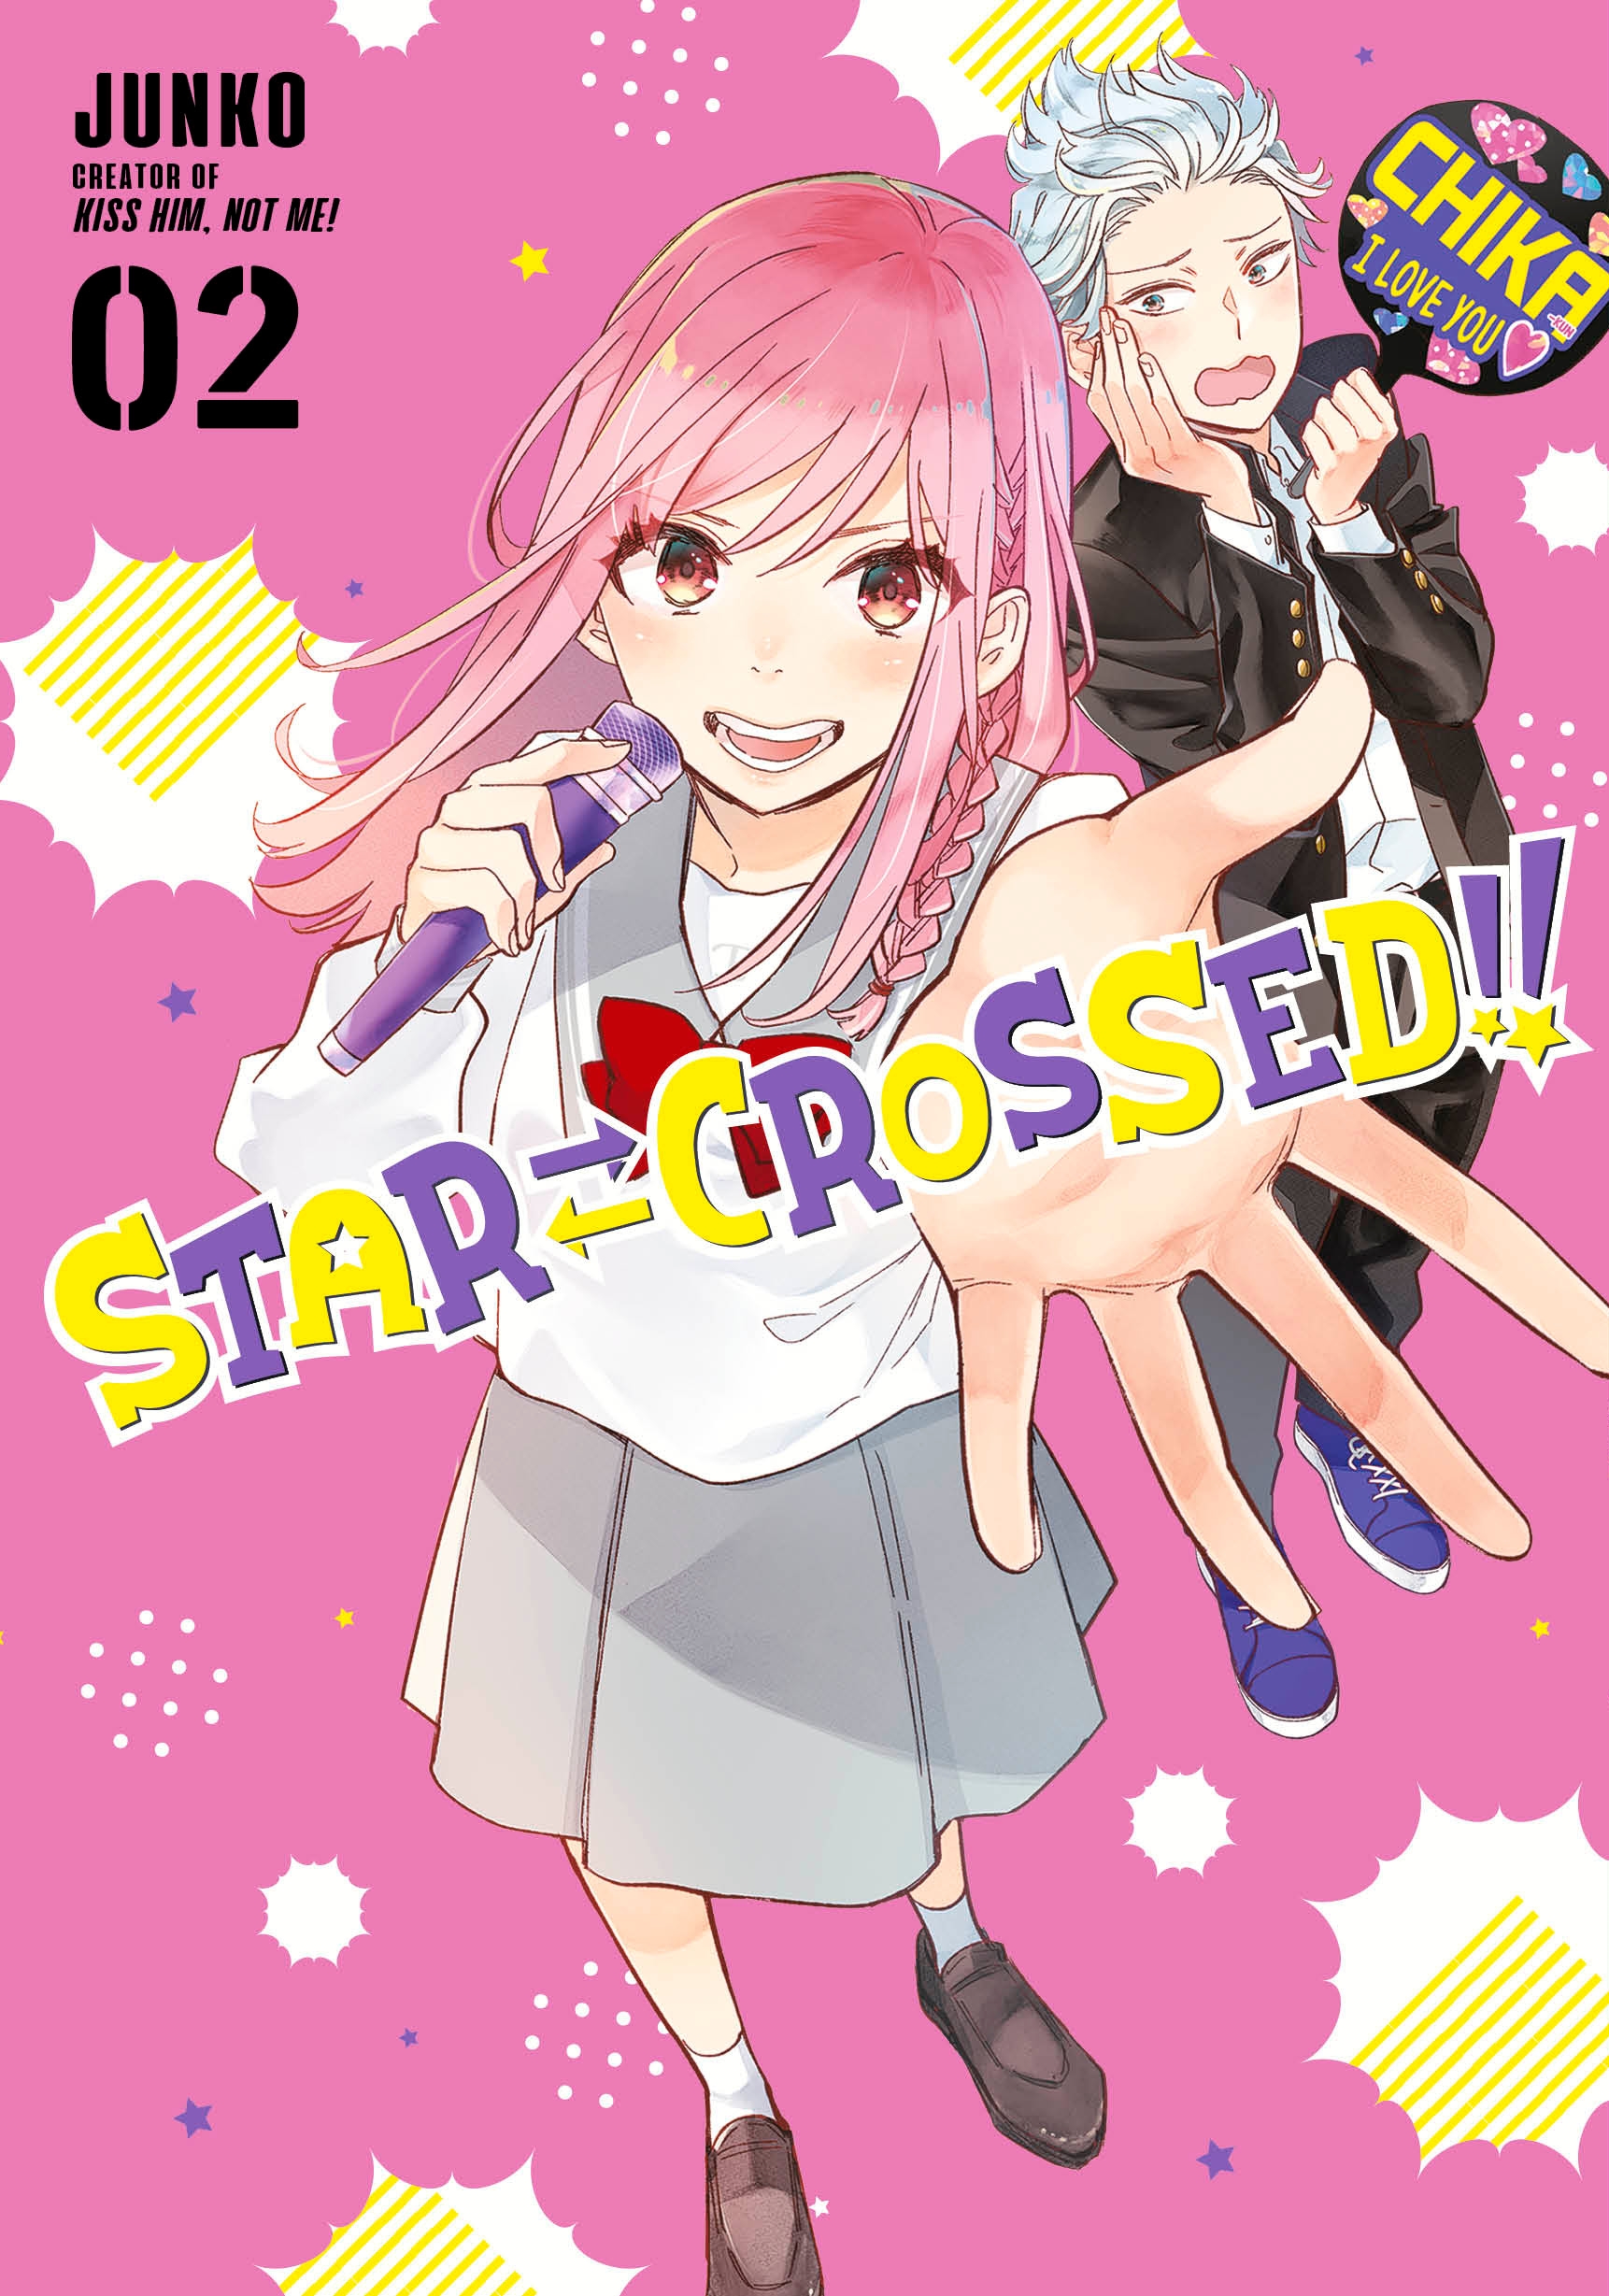 Seasonal Previews Archives - Star Crossed Anime